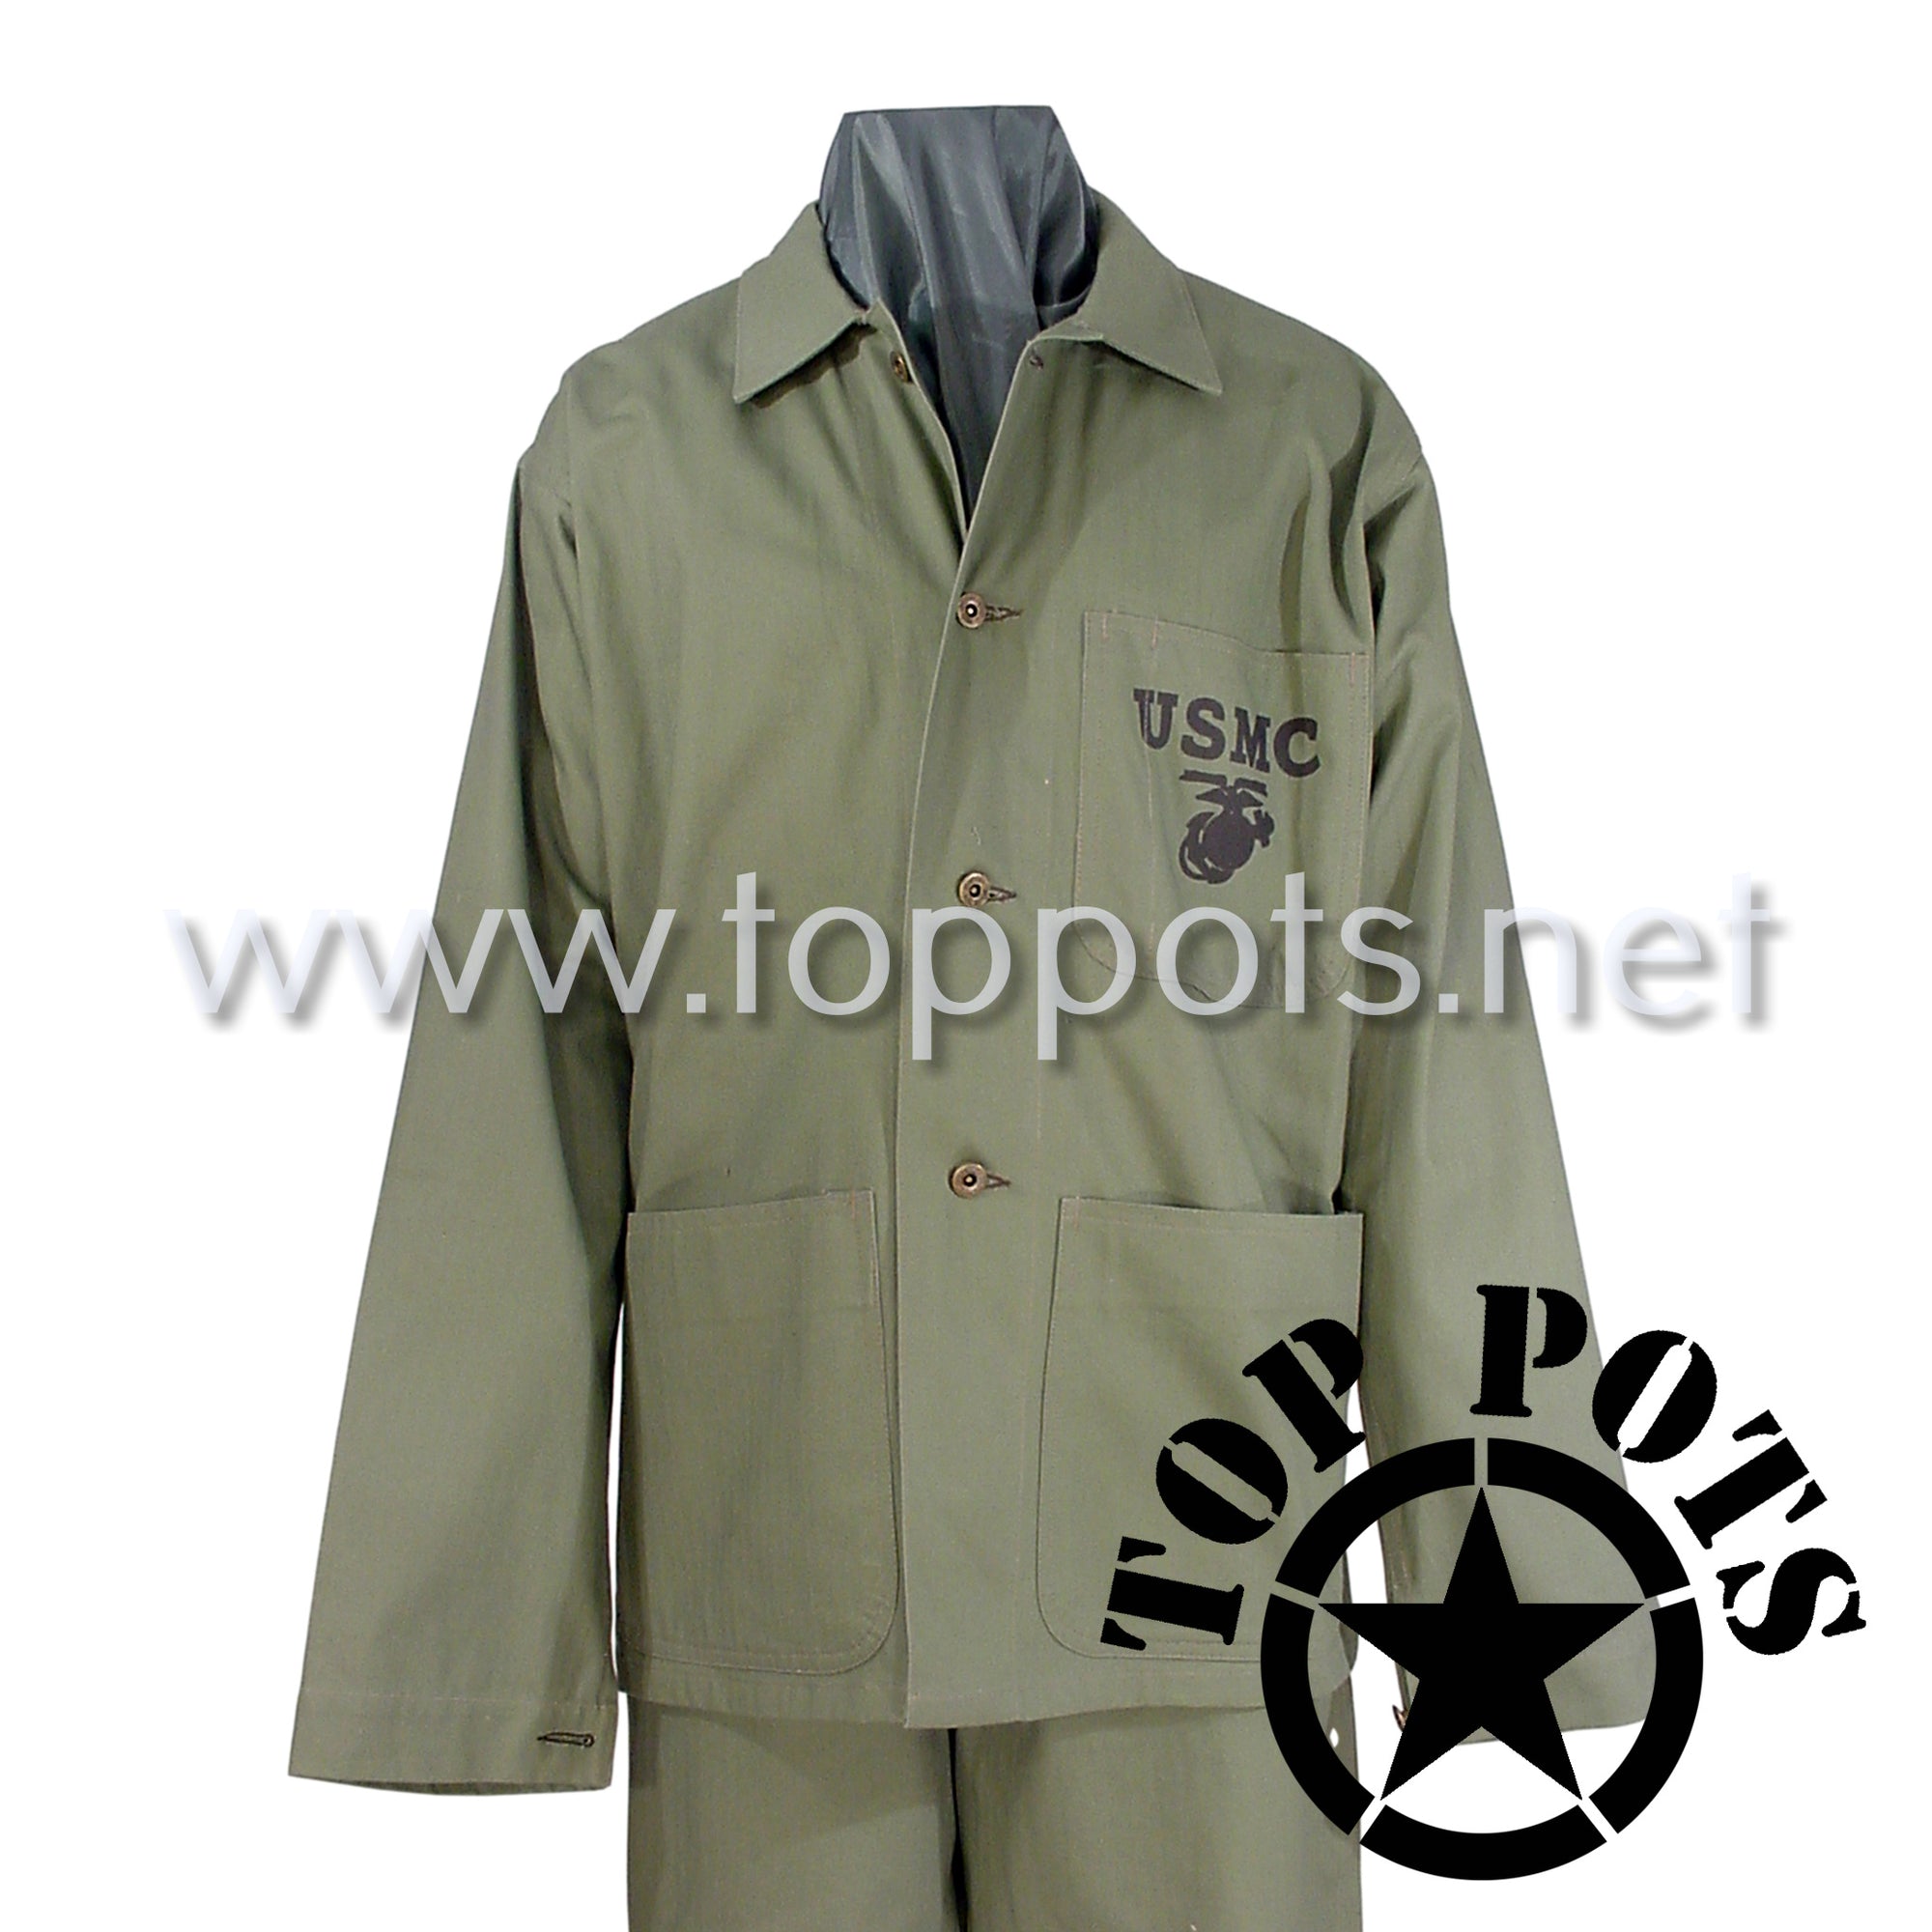 WWII USMC Reproduction M1941 P41 Cotton HBT Uniform Herring Bone Twill Olive Drab Field Utility Fatigue Jacket